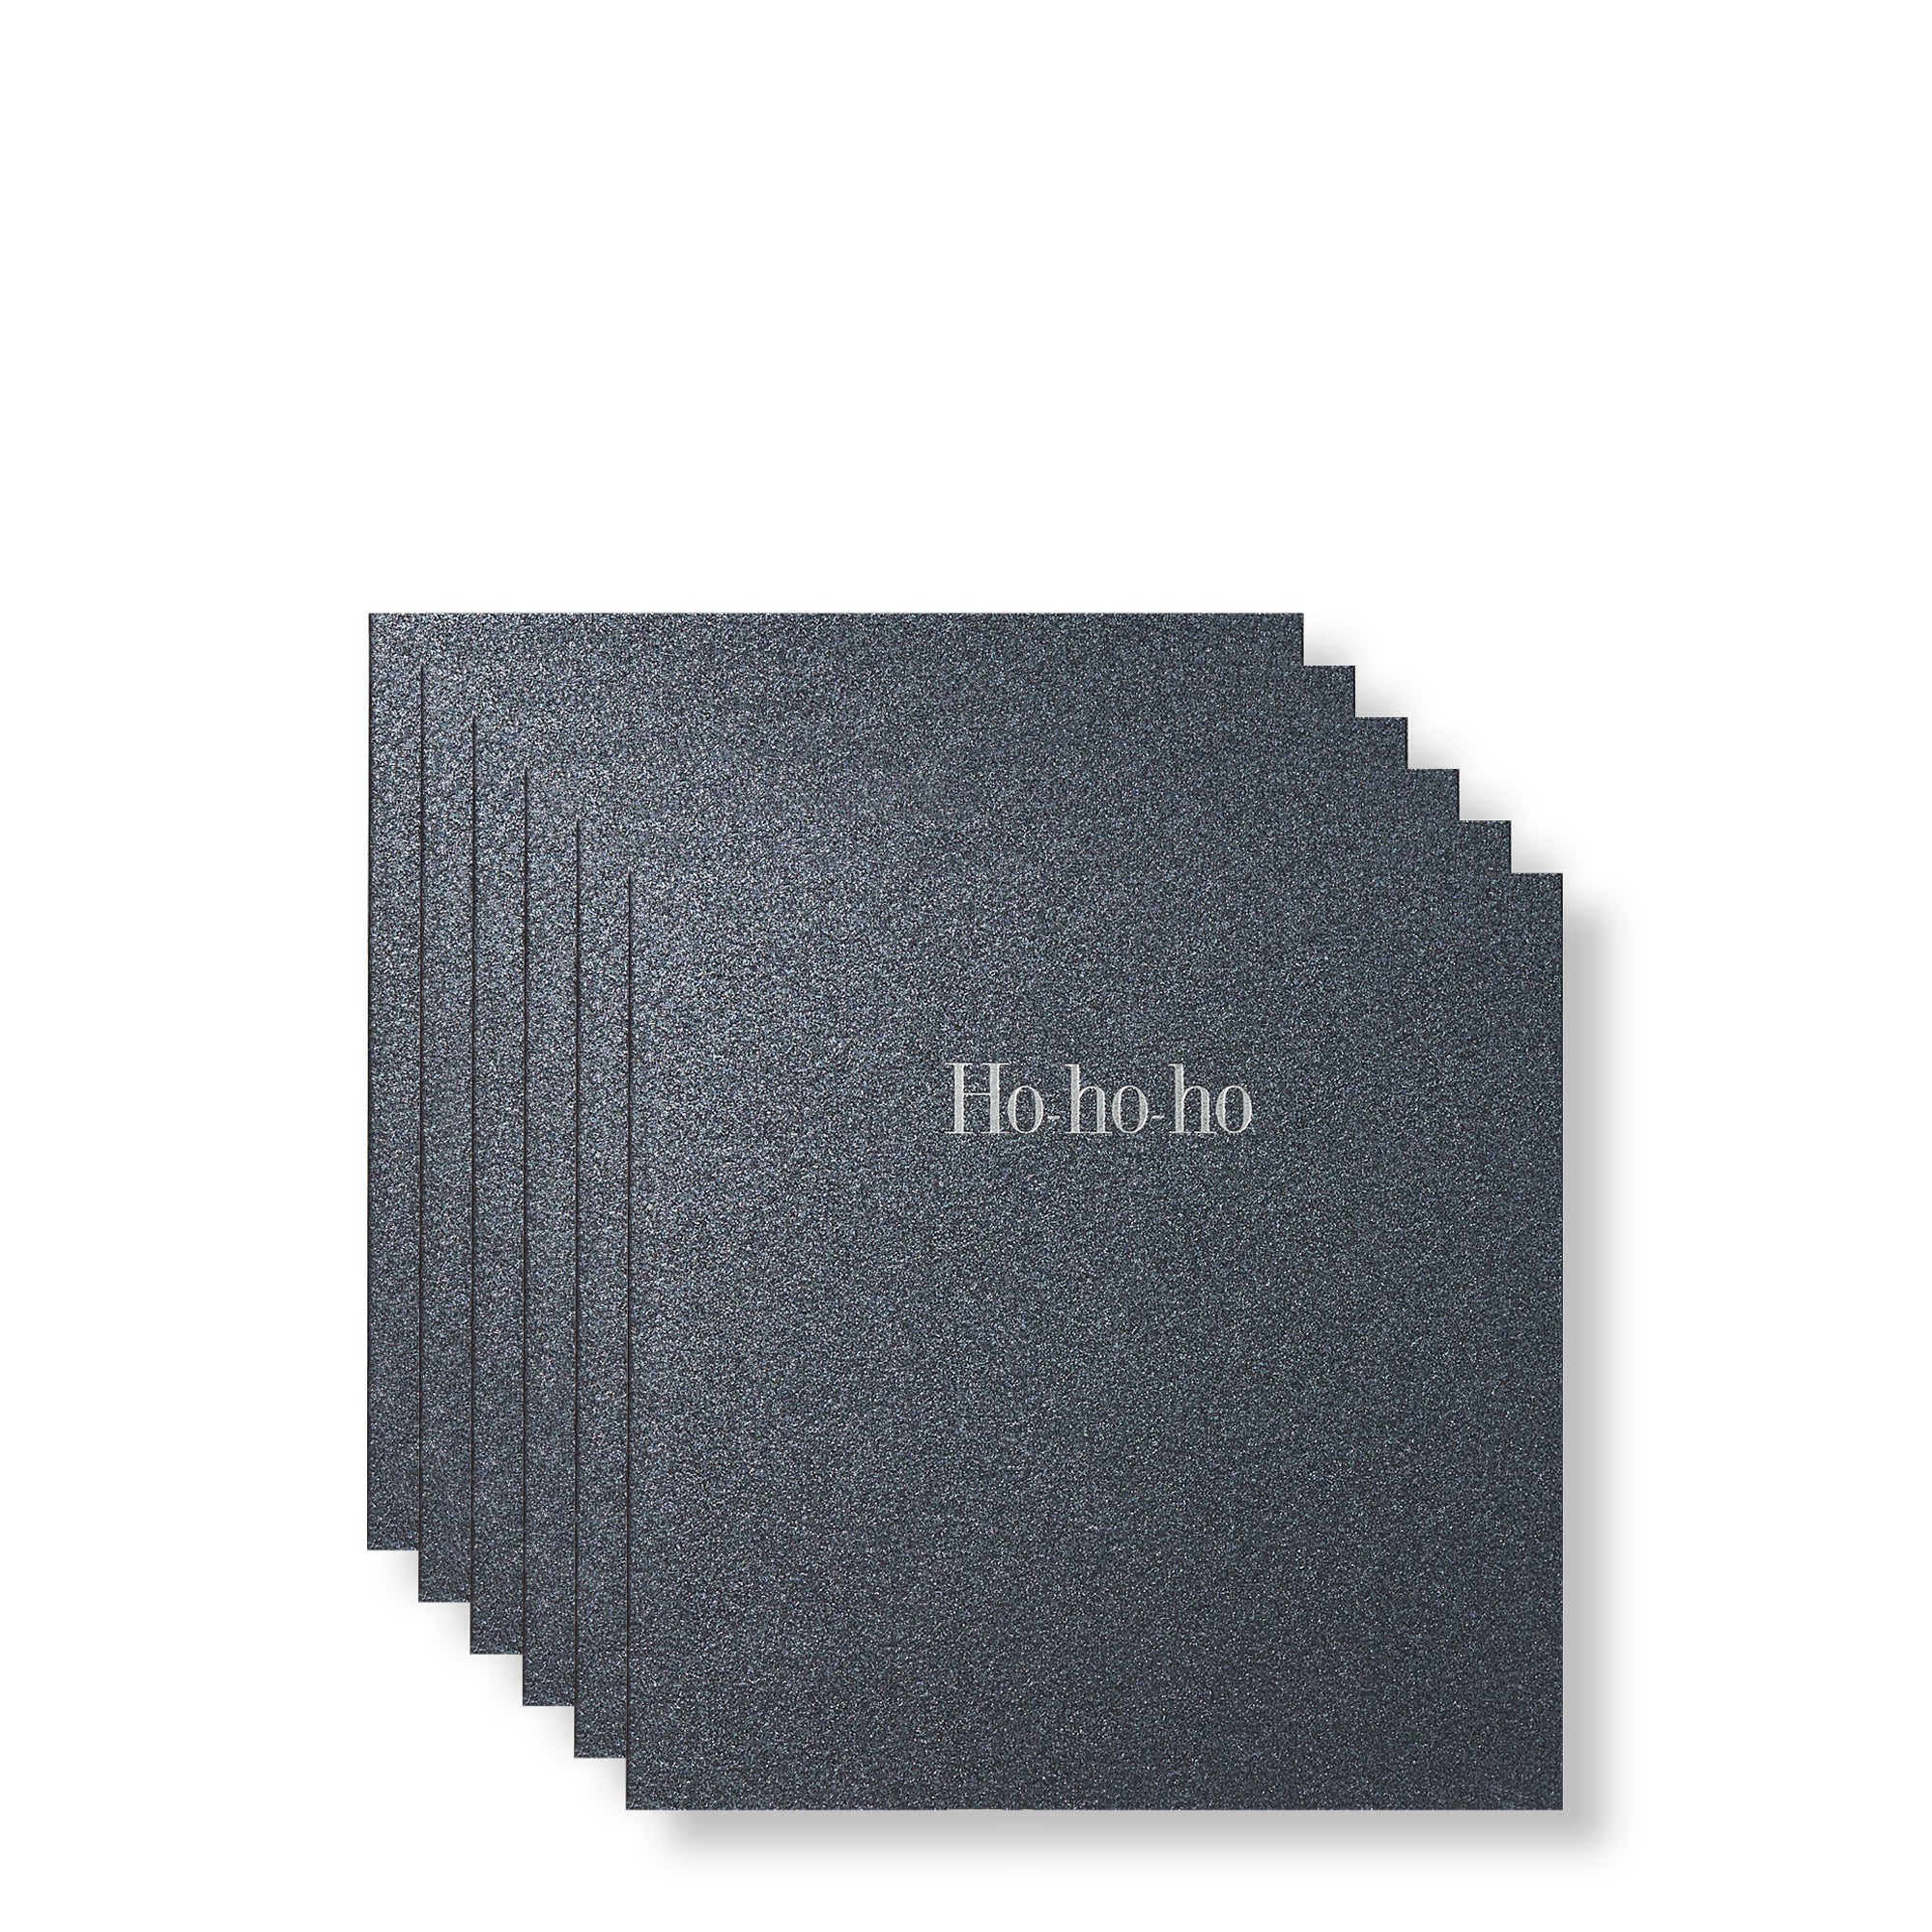 Ho-Ho-Ho Mini Cards-Story of Elegance